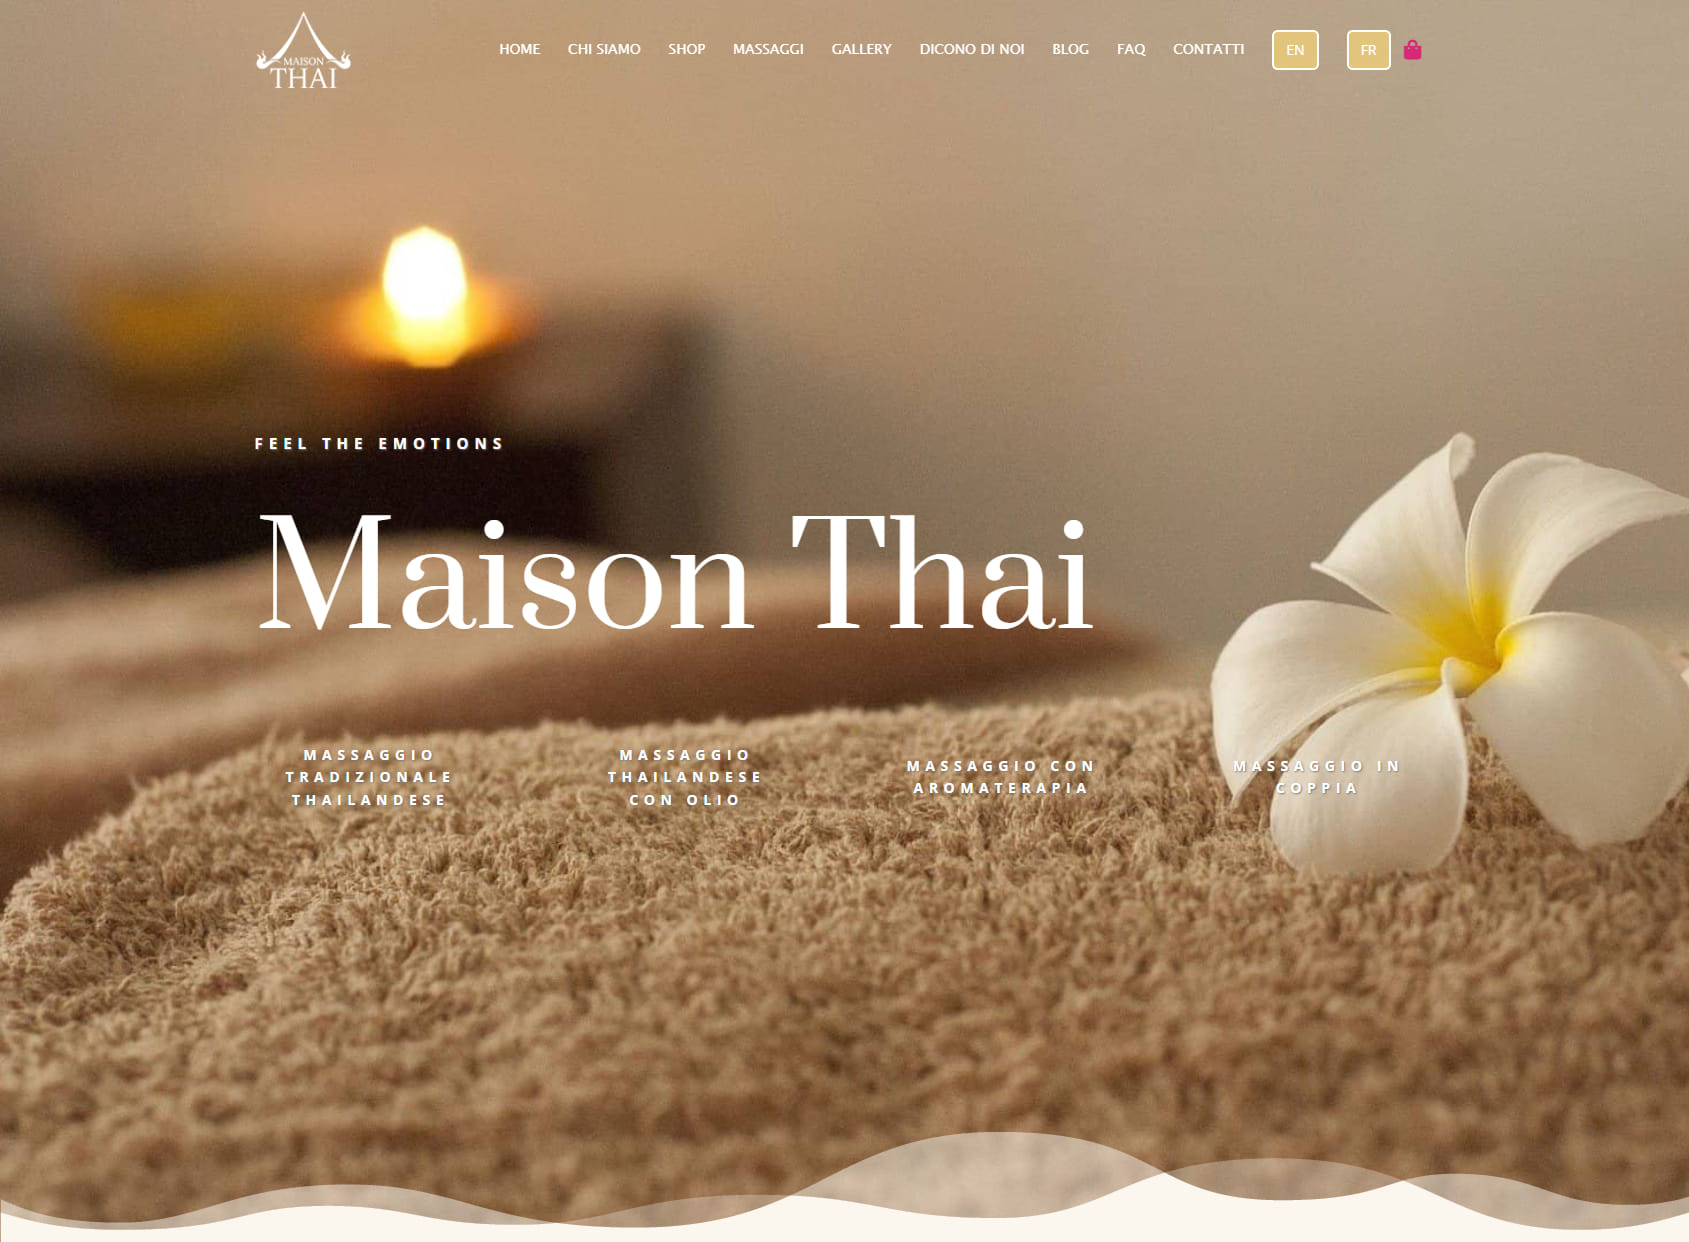 Maison Thai Thai Massage Center